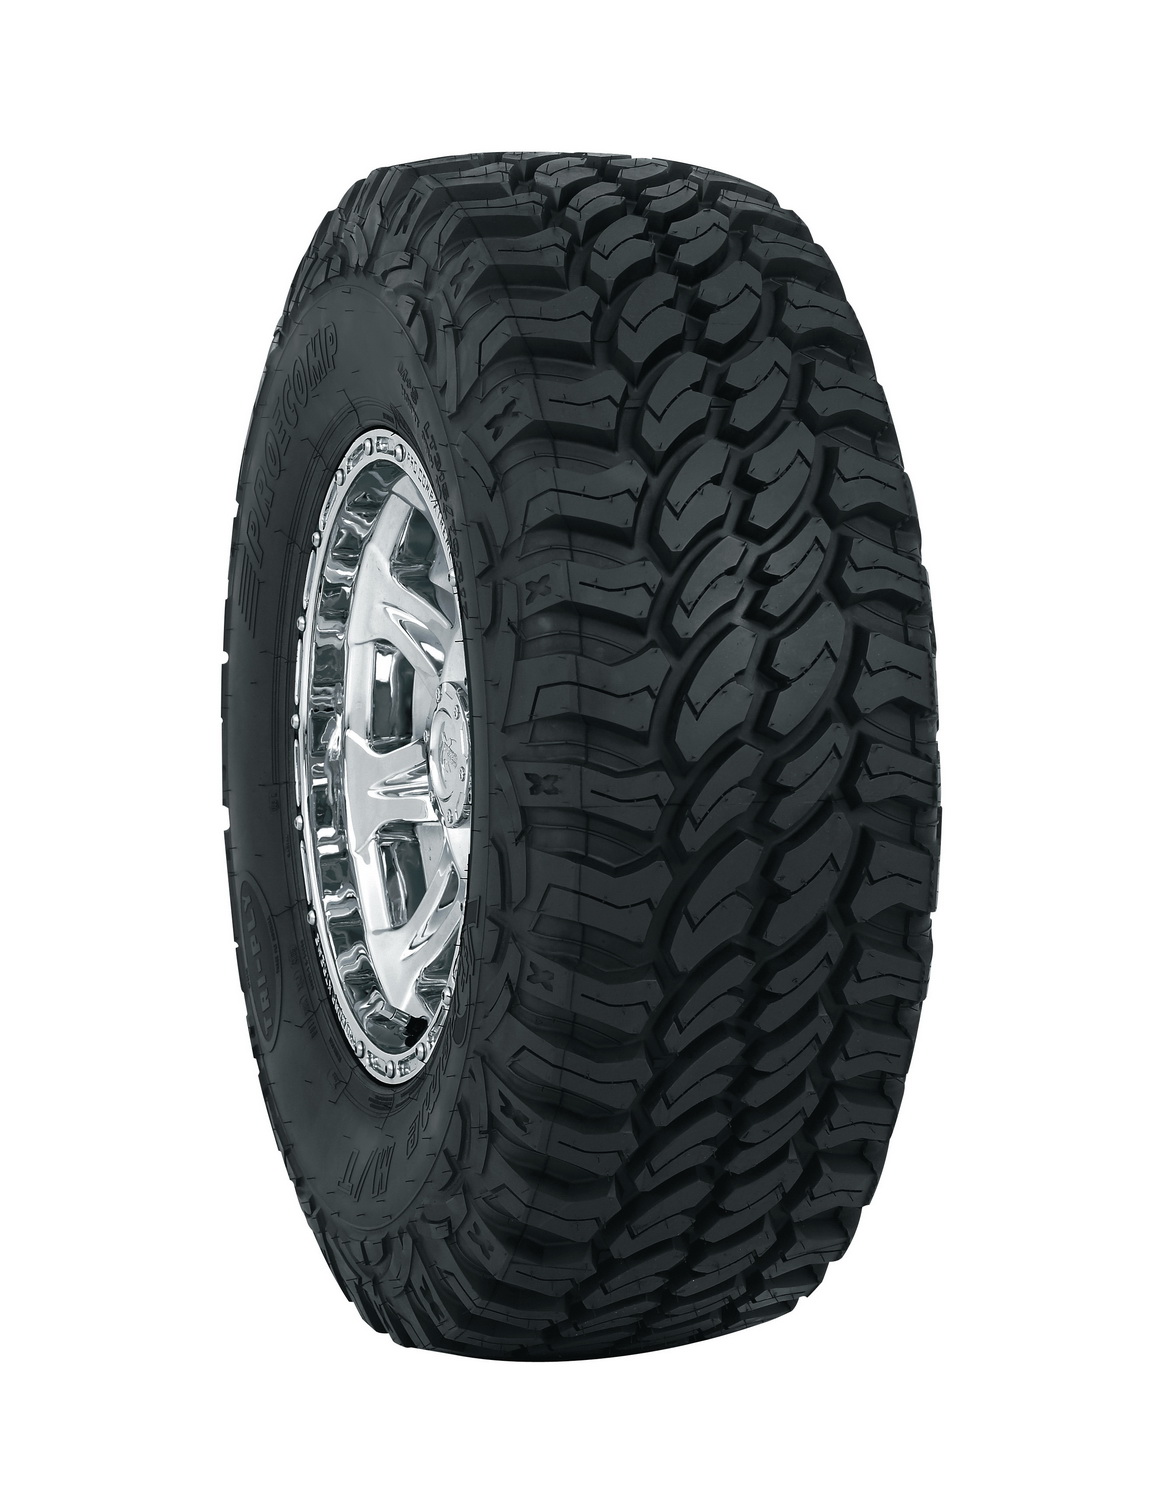 Pro Comp Tires Pro Comp Tires 670265 Pro Comp Xtreme Mud Terrain; Tire